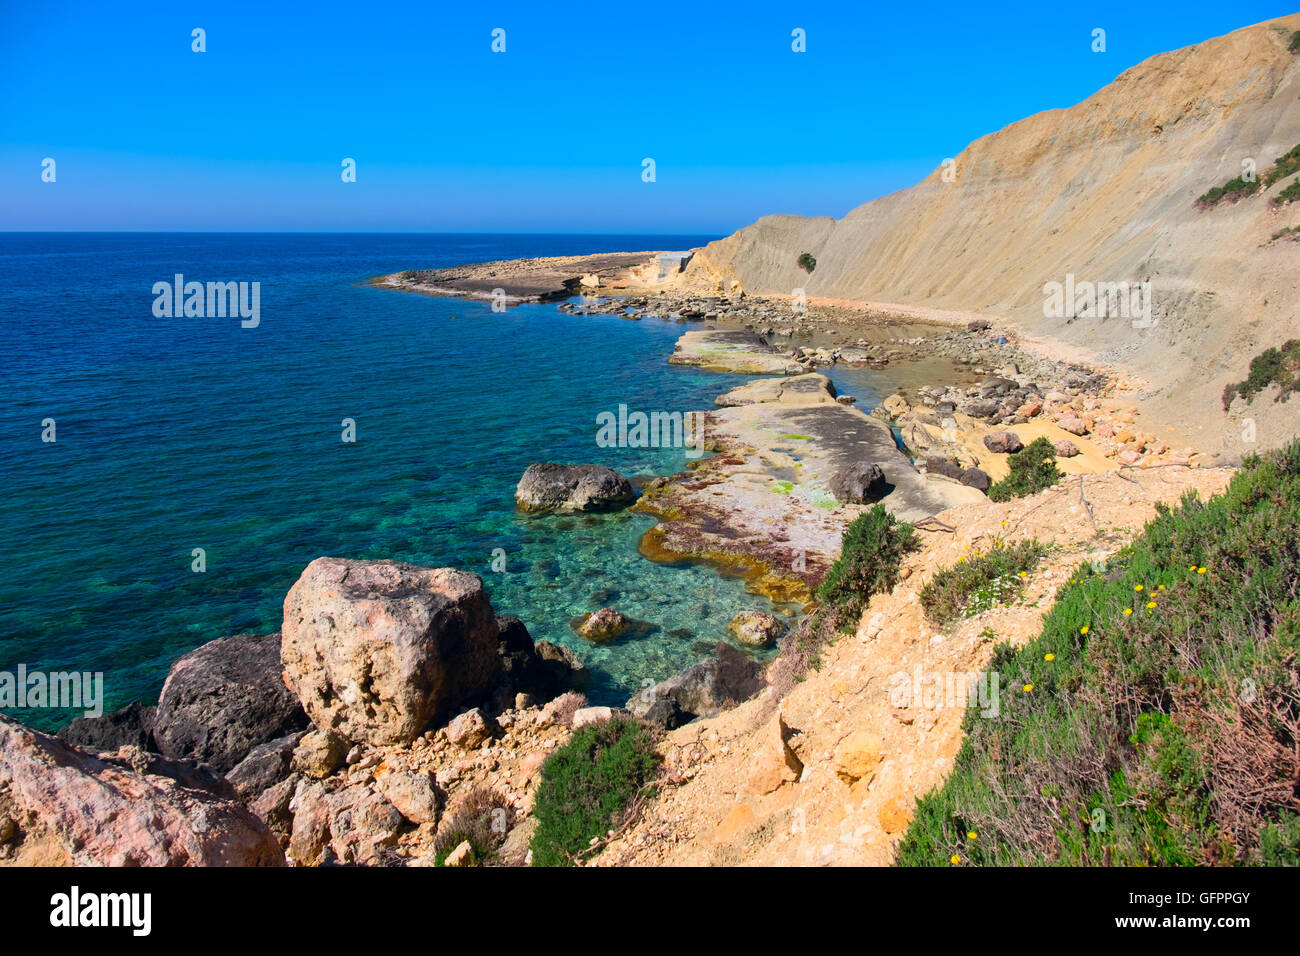 rough and rocky coastline of the island of malta , europe Stock Photo